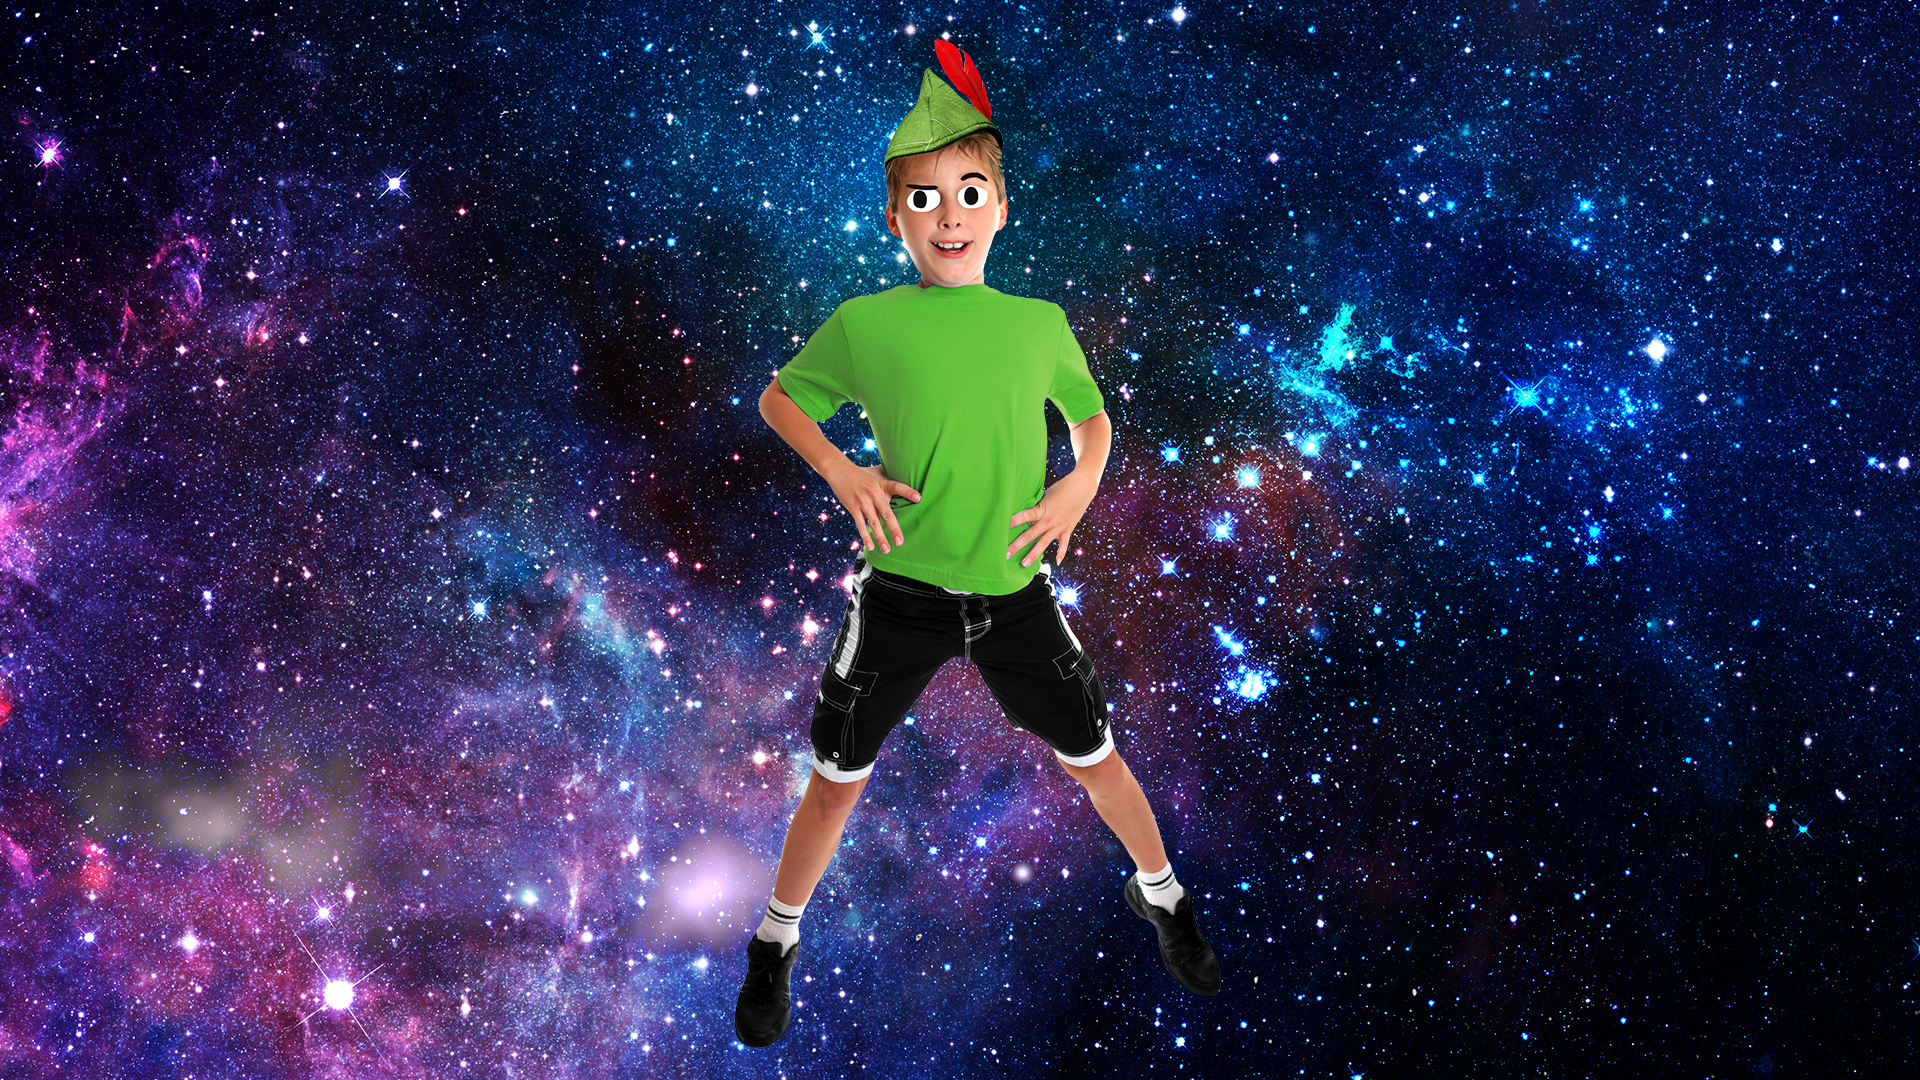 Beano Peter Pan in space